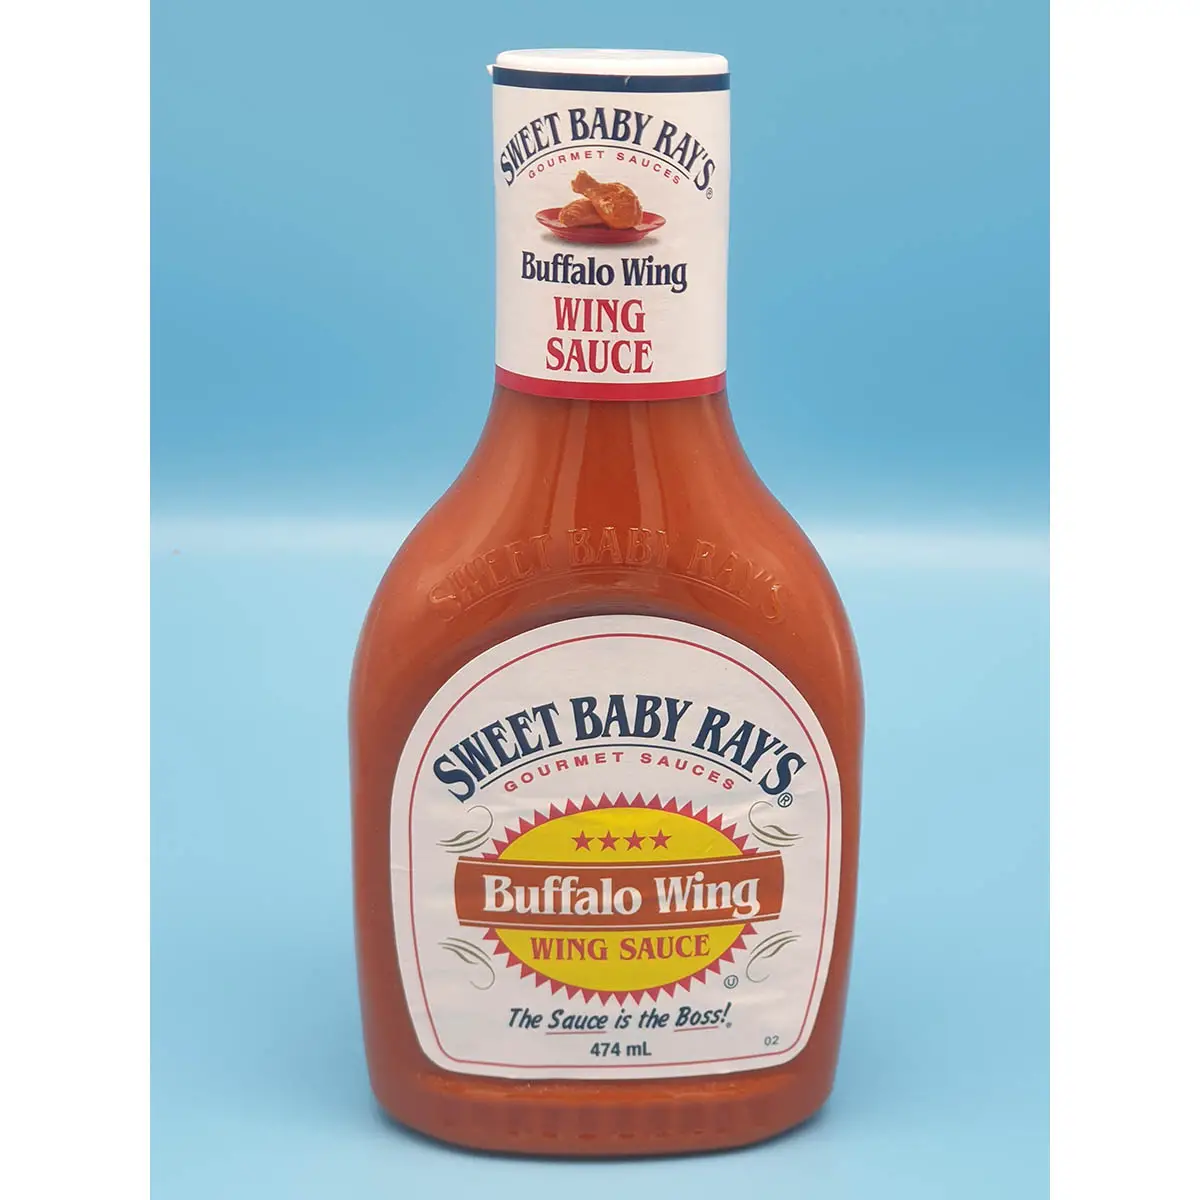 Sweet Baby Rays Buffalo Wing Sauce 474ml USA